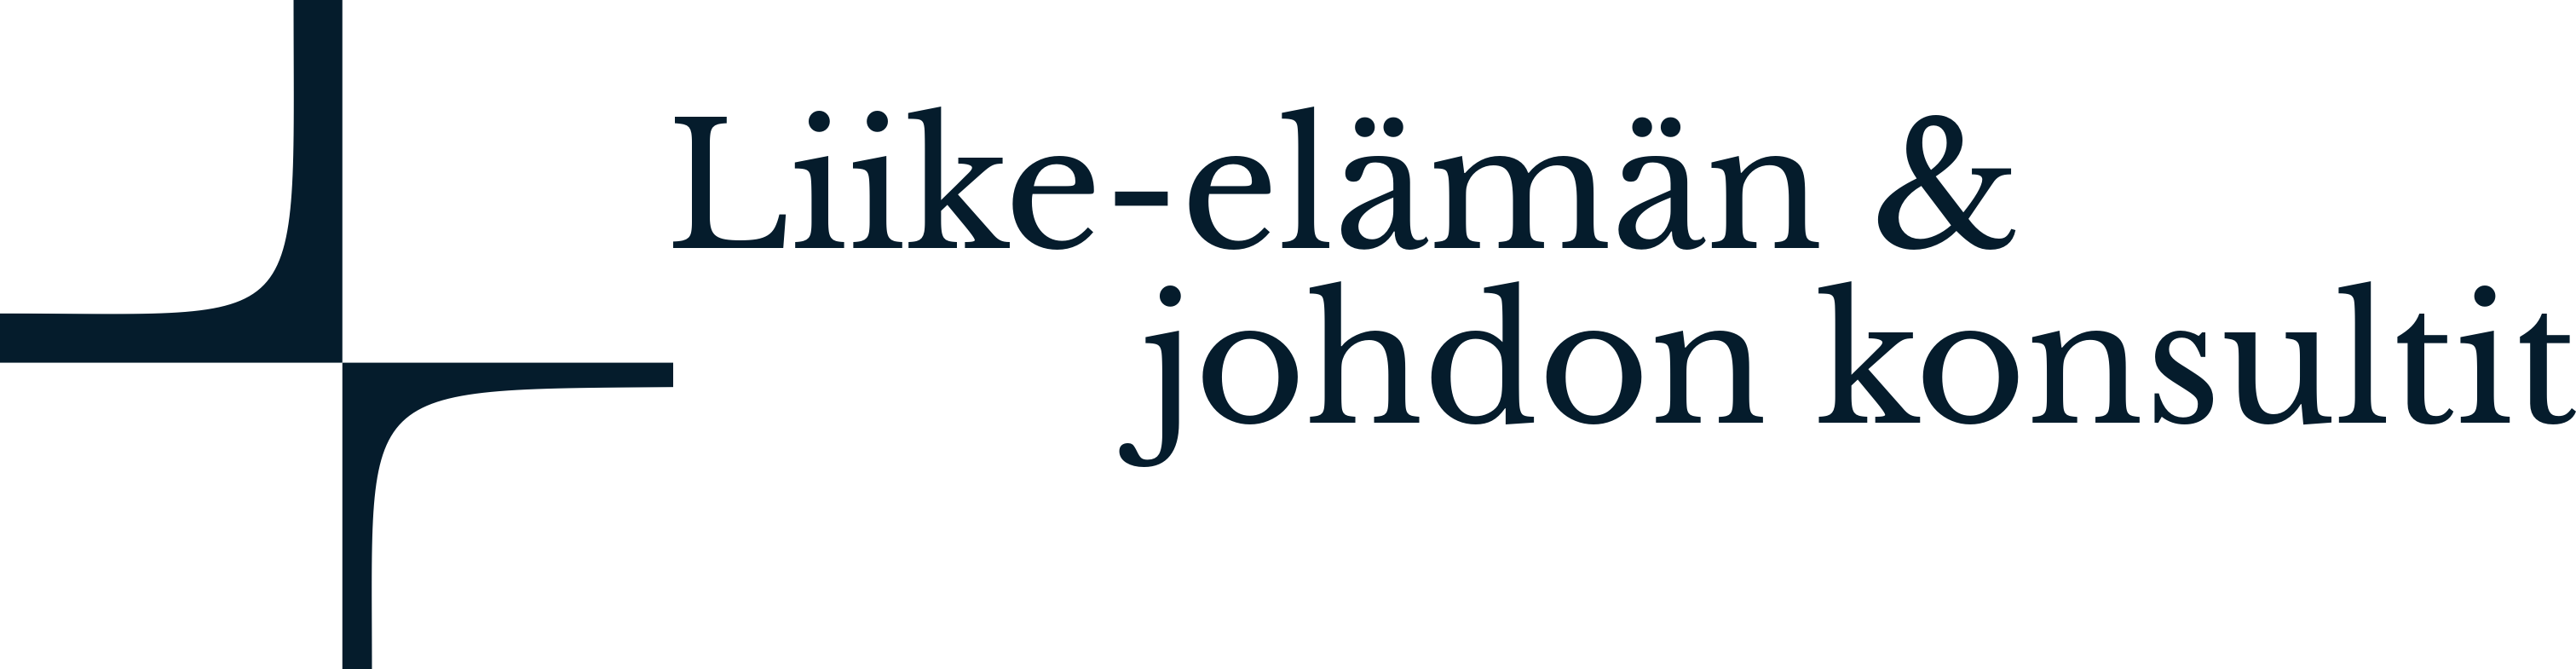 LJK logo dark